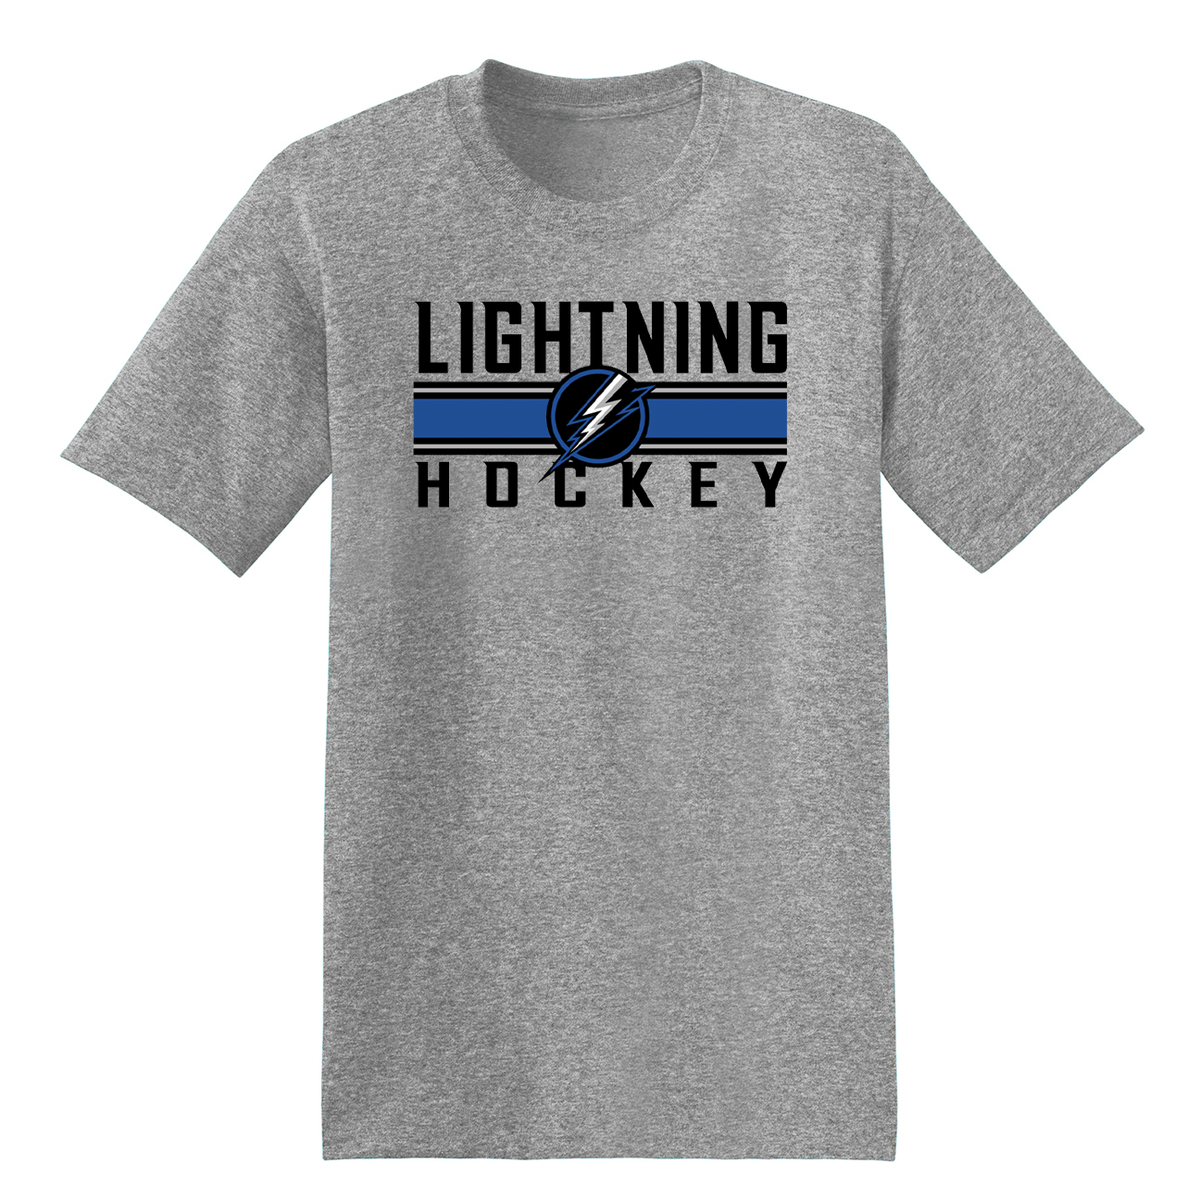 Long Island Lightning Hockey T-Shirt